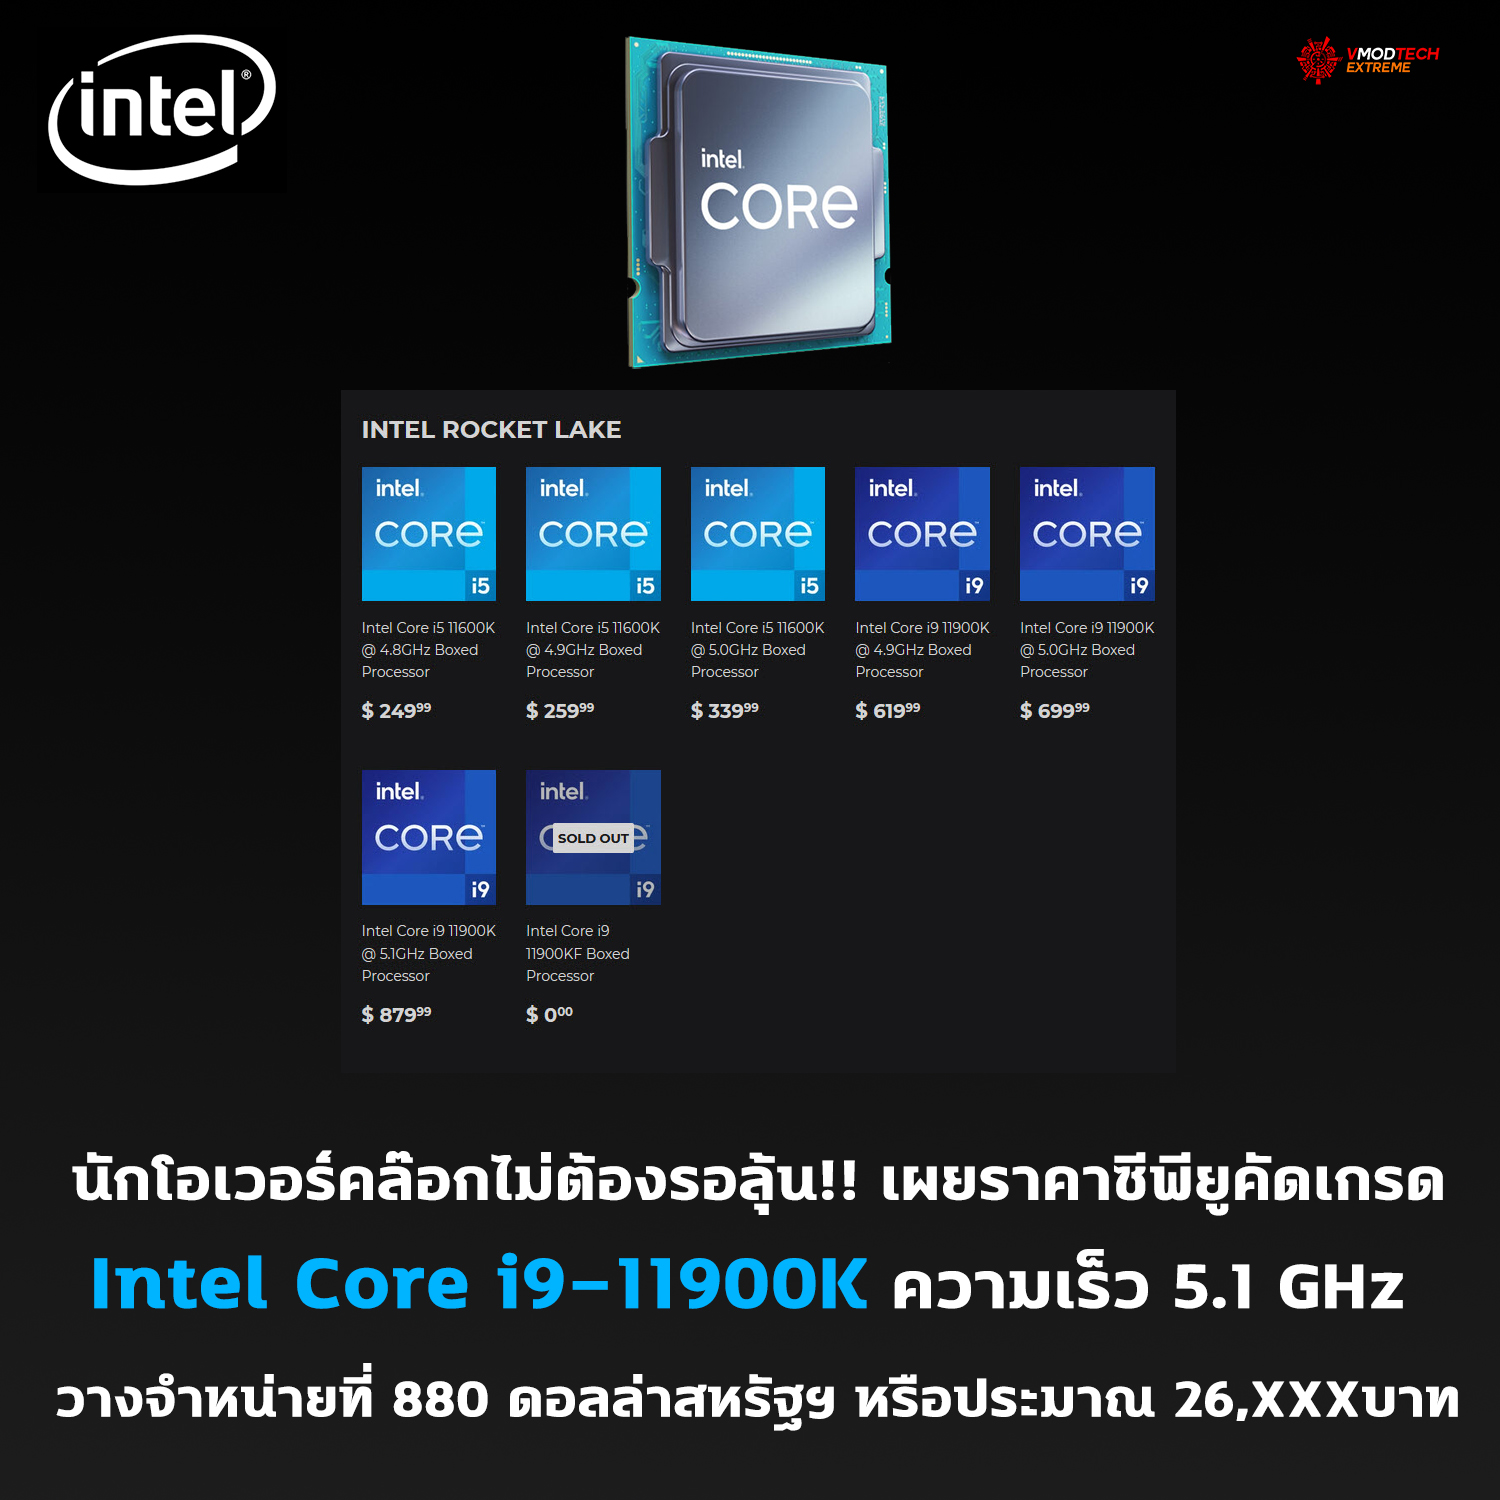 intel core i9 11900k siliconlottery นักโอเวอร์คล๊อกไม่ต้องรอลุ้น!! เผยราคาซีพียูคัดเกรด Intel Core i9 11900K ความเร็ว 5.1 GHz วางจำหน่ายที่ 880 ดอลล่าสหรัฐฯ หรือประมาณ 26,XXXบาท